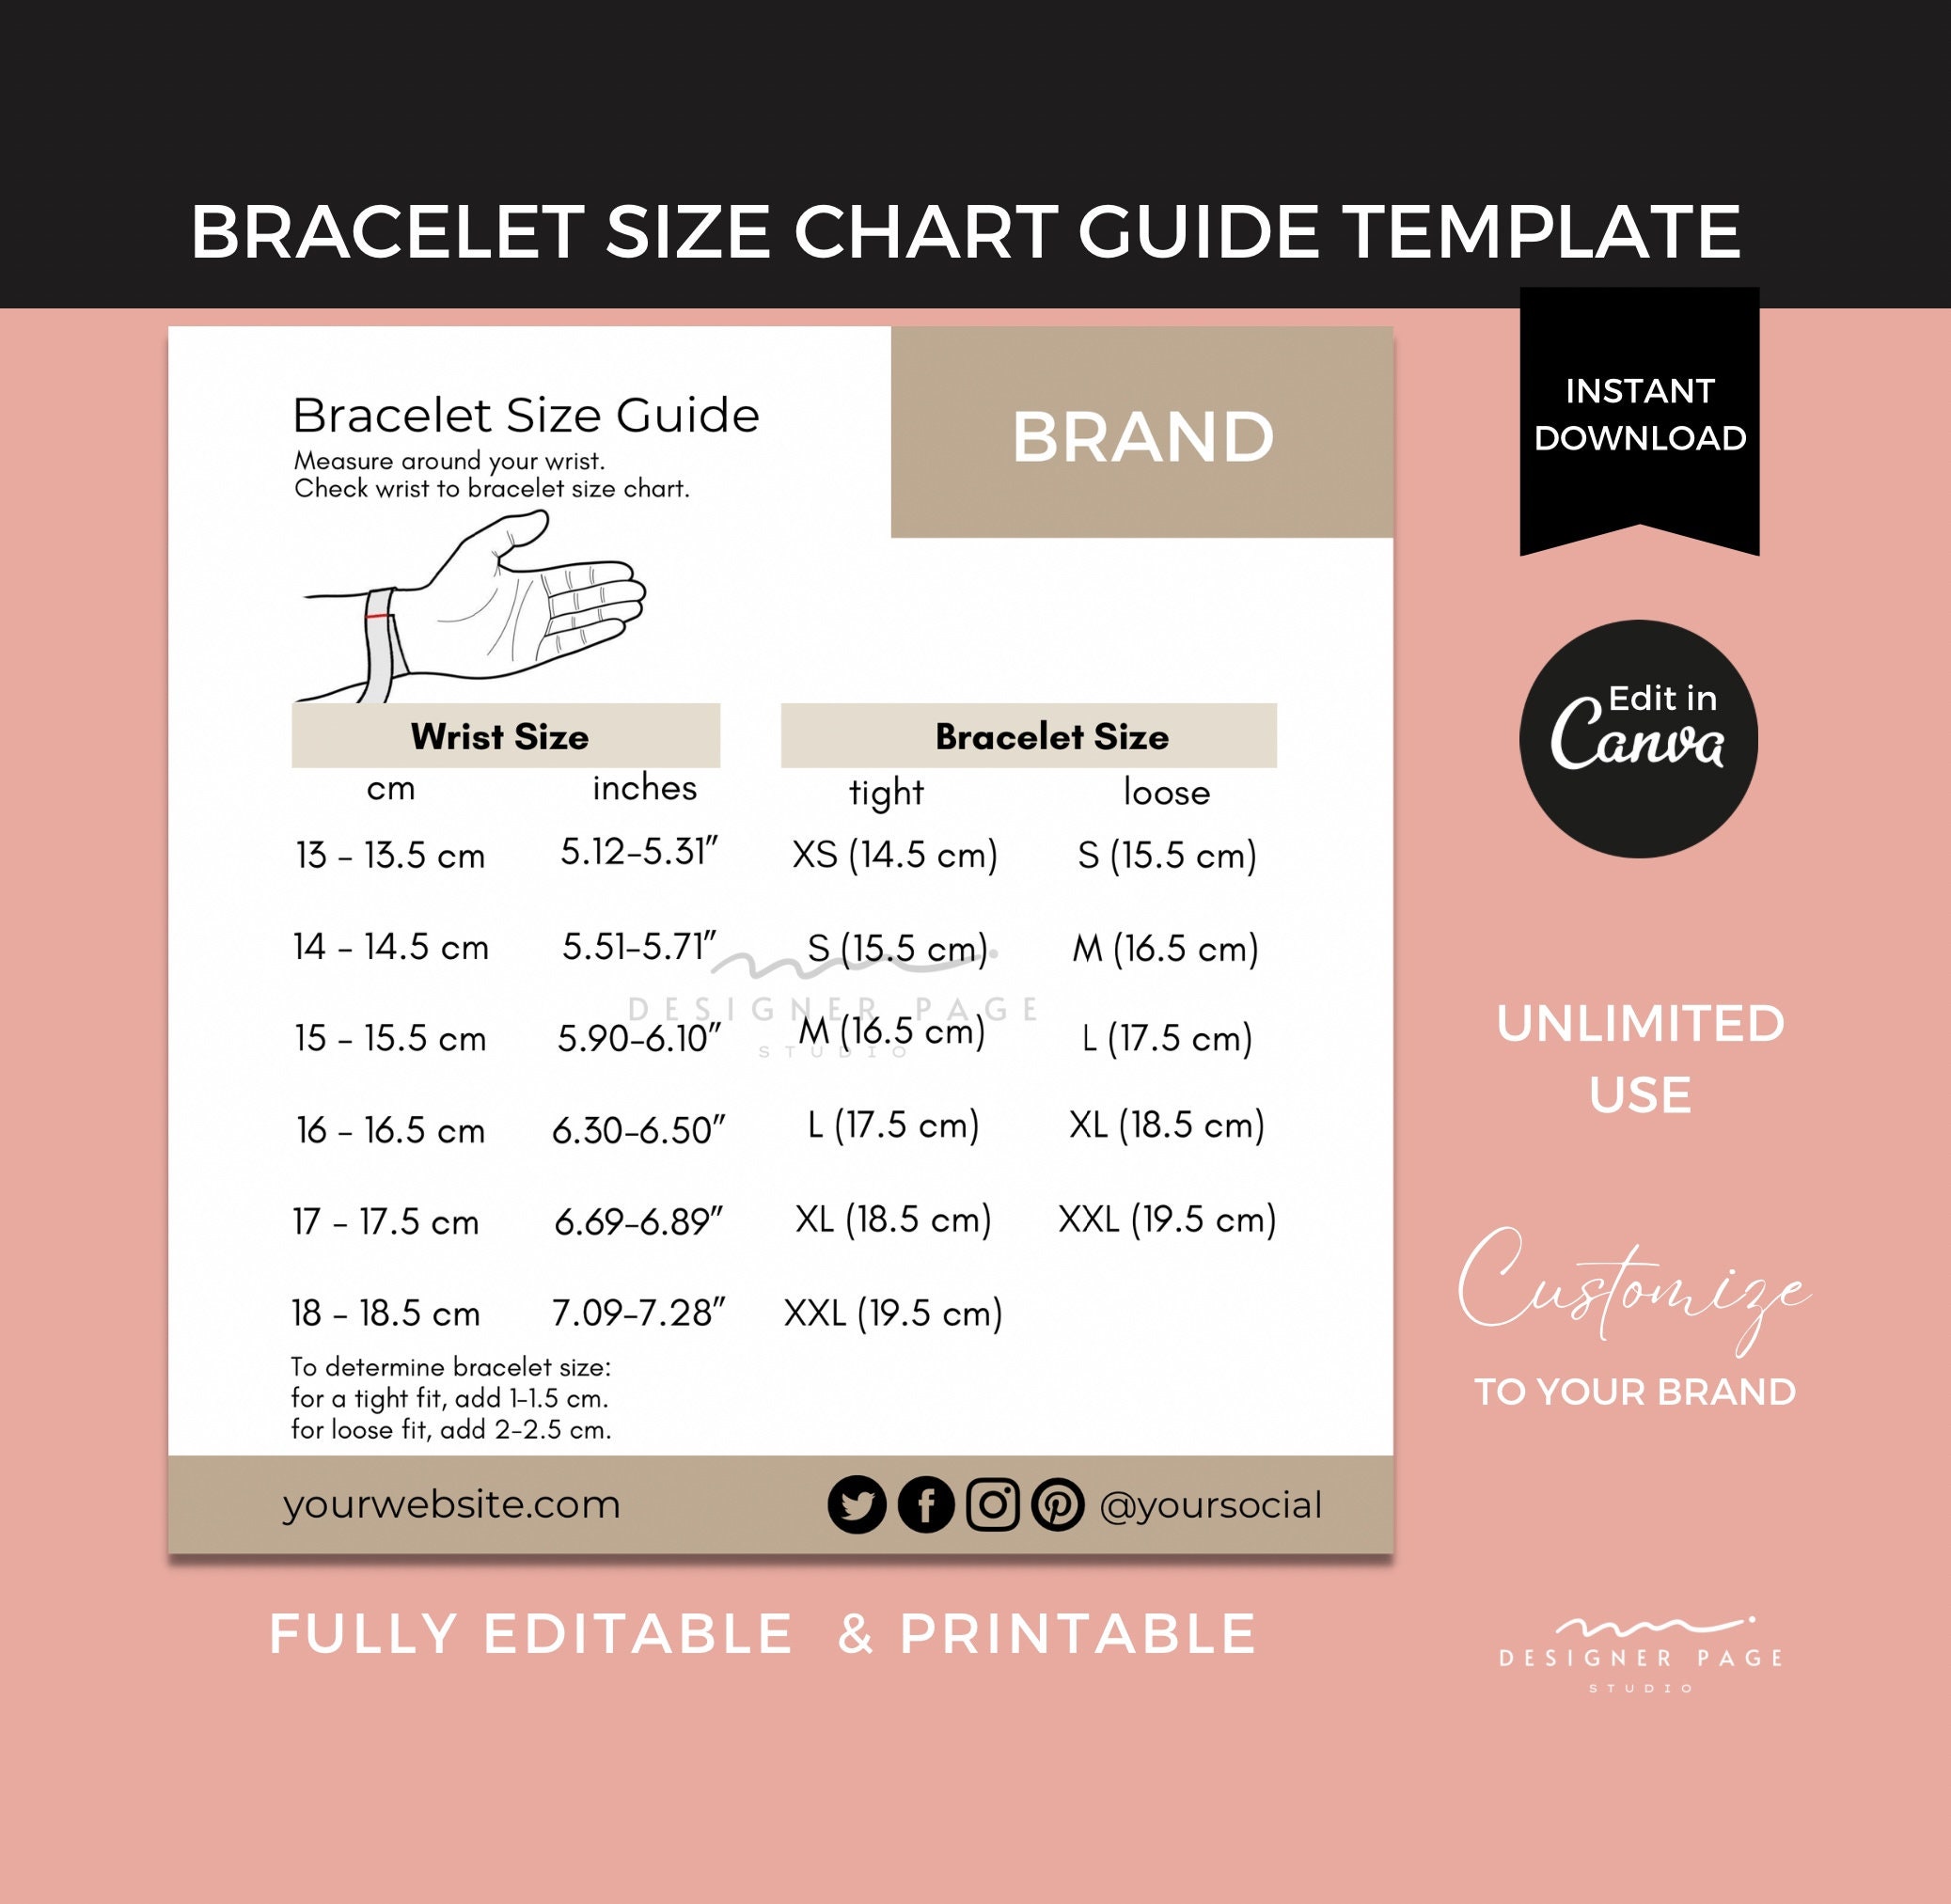 Bracelet Size Guide|Go Grandeur